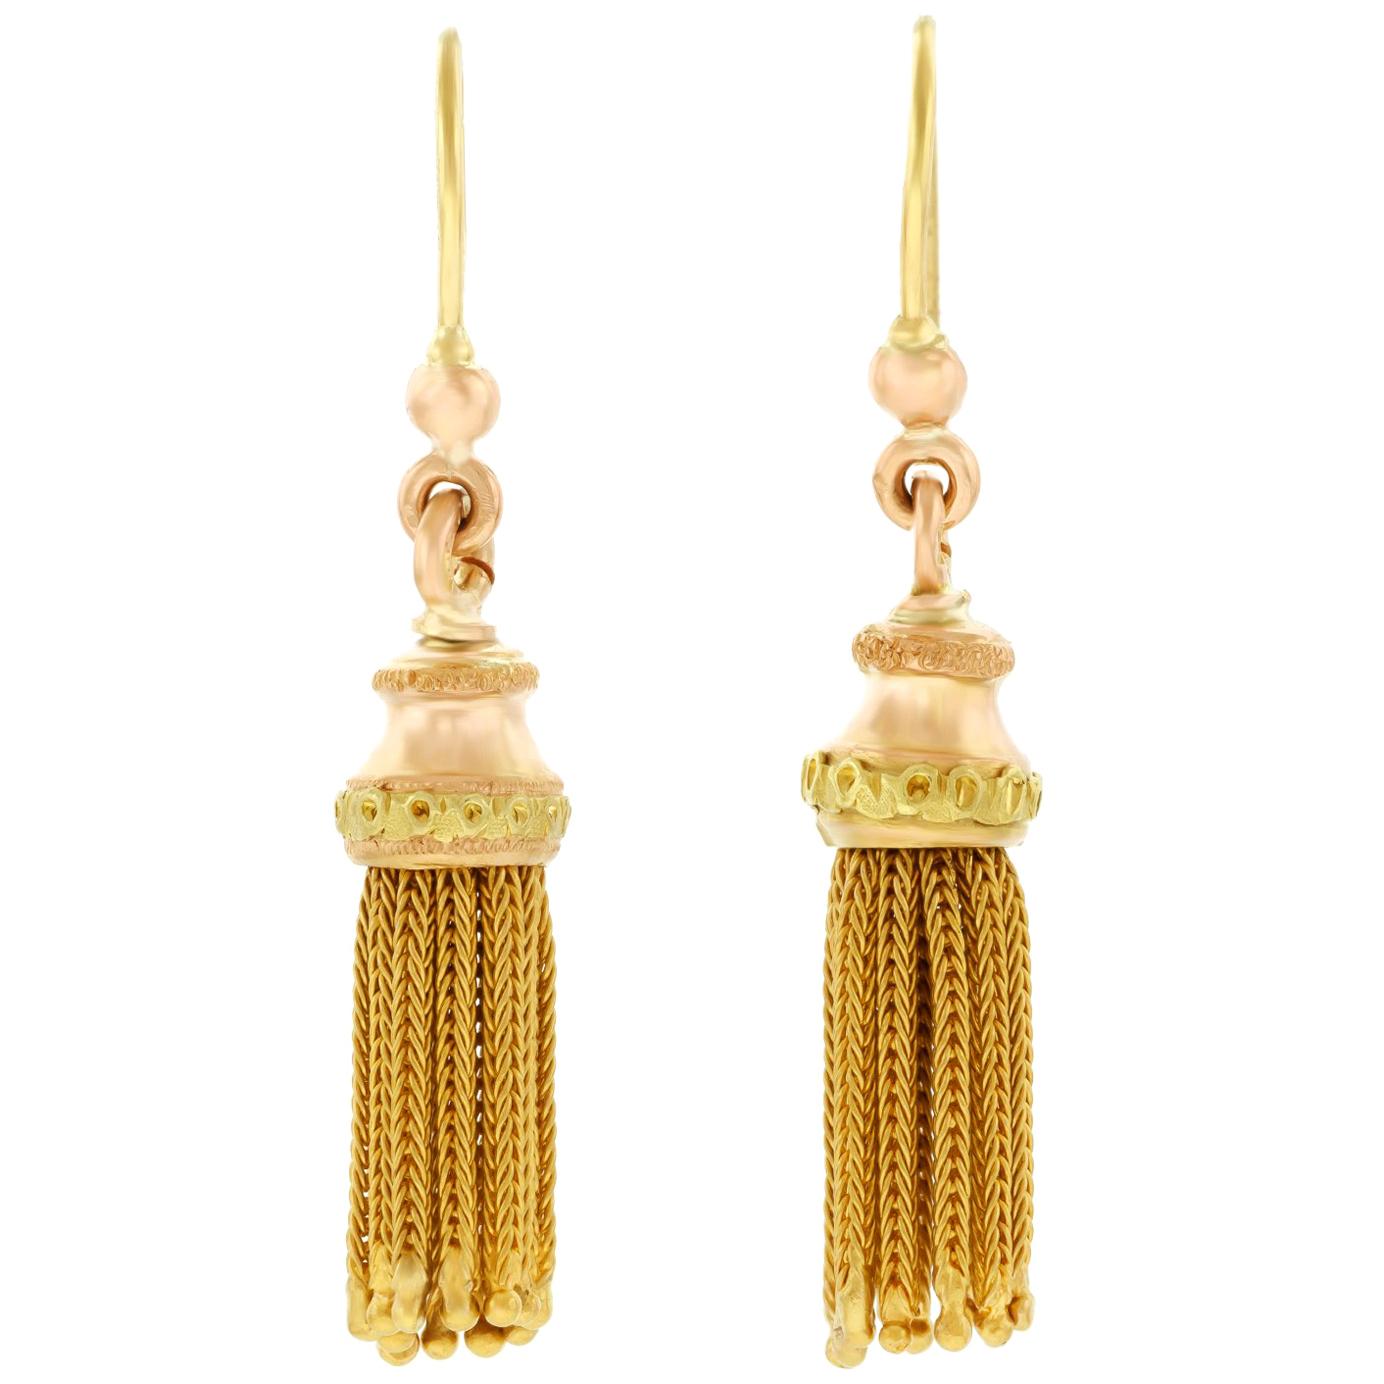 Antique Gold Tassel Earrings, French